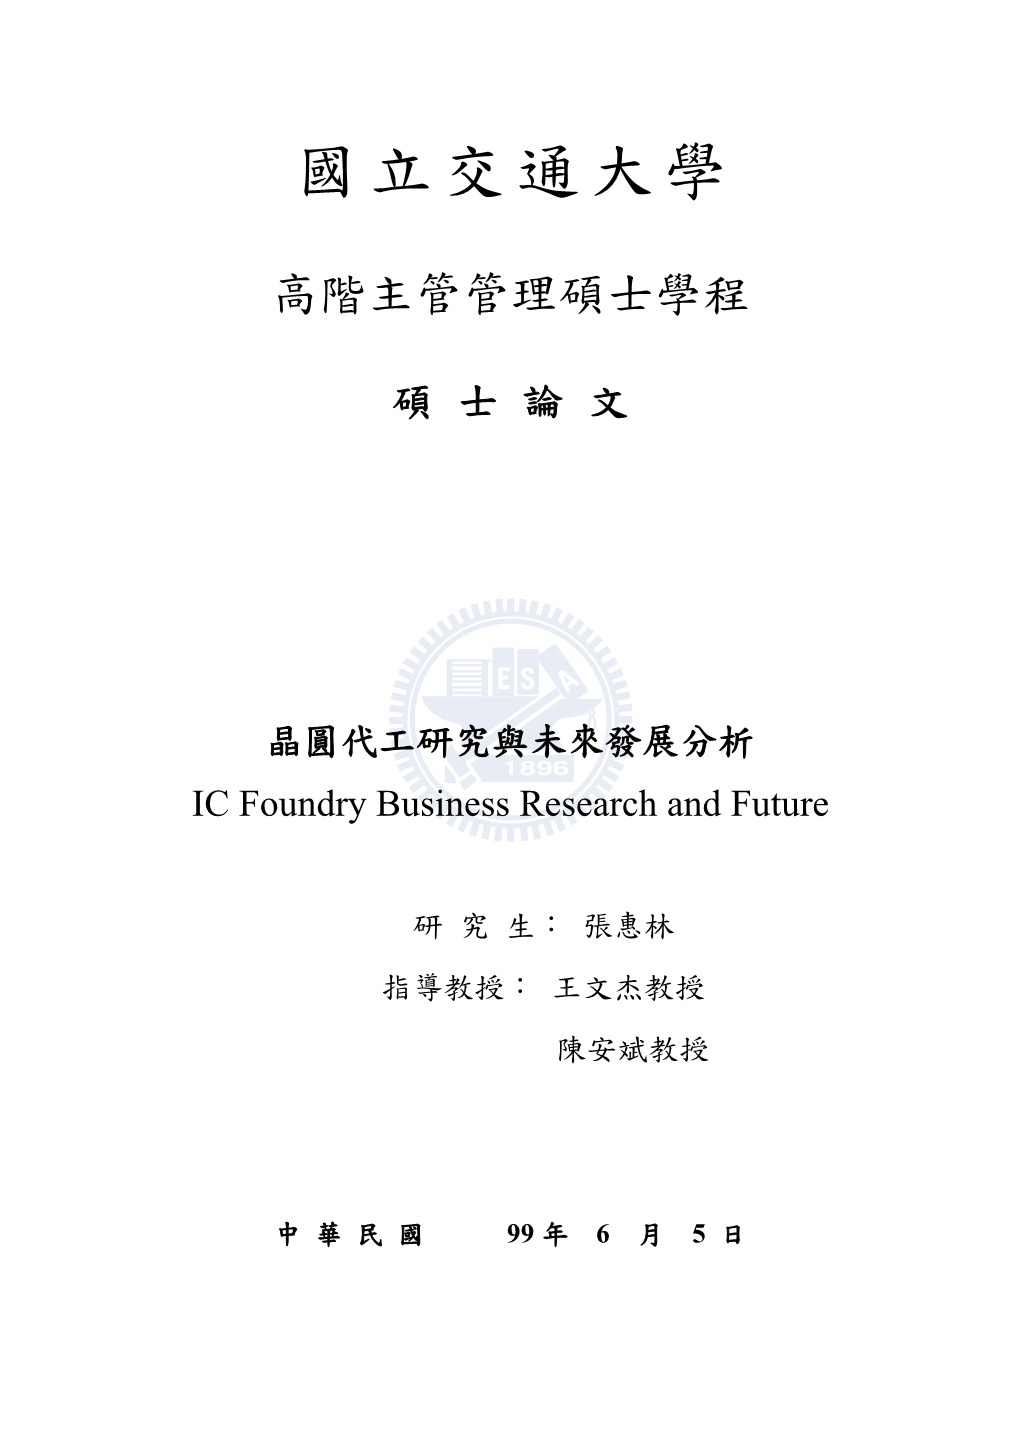 晶圓代工研究與未來發展分析 IC Foundry Business Research and Future